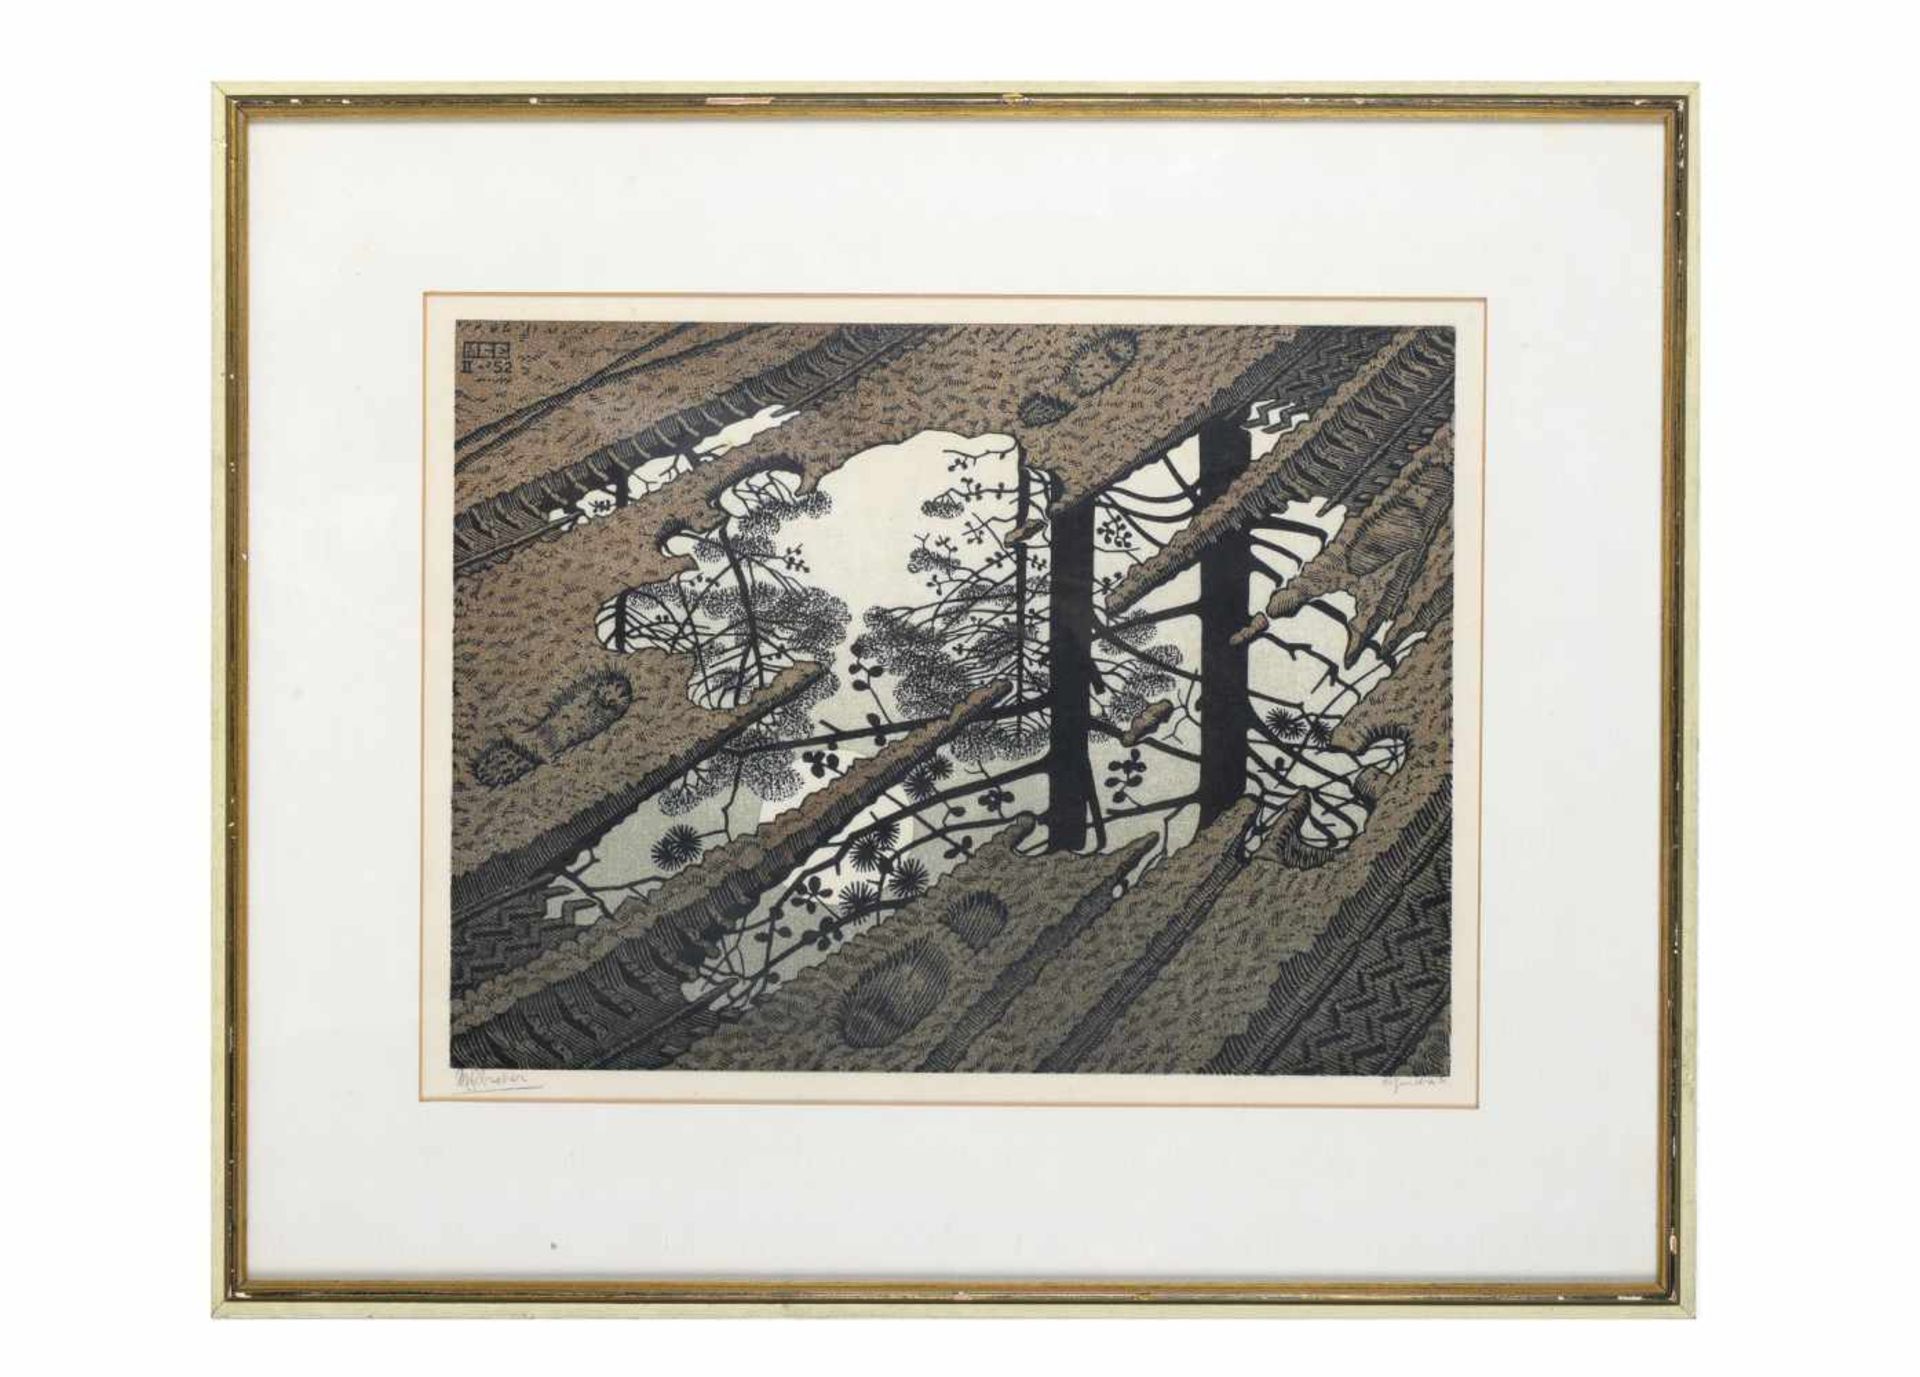 Maurits Cornelis Escher (1898-1972) 'Modderplas', gesigneerd l.o., 'eigen druk' r.o., februari 1952, - Image 2 of 8